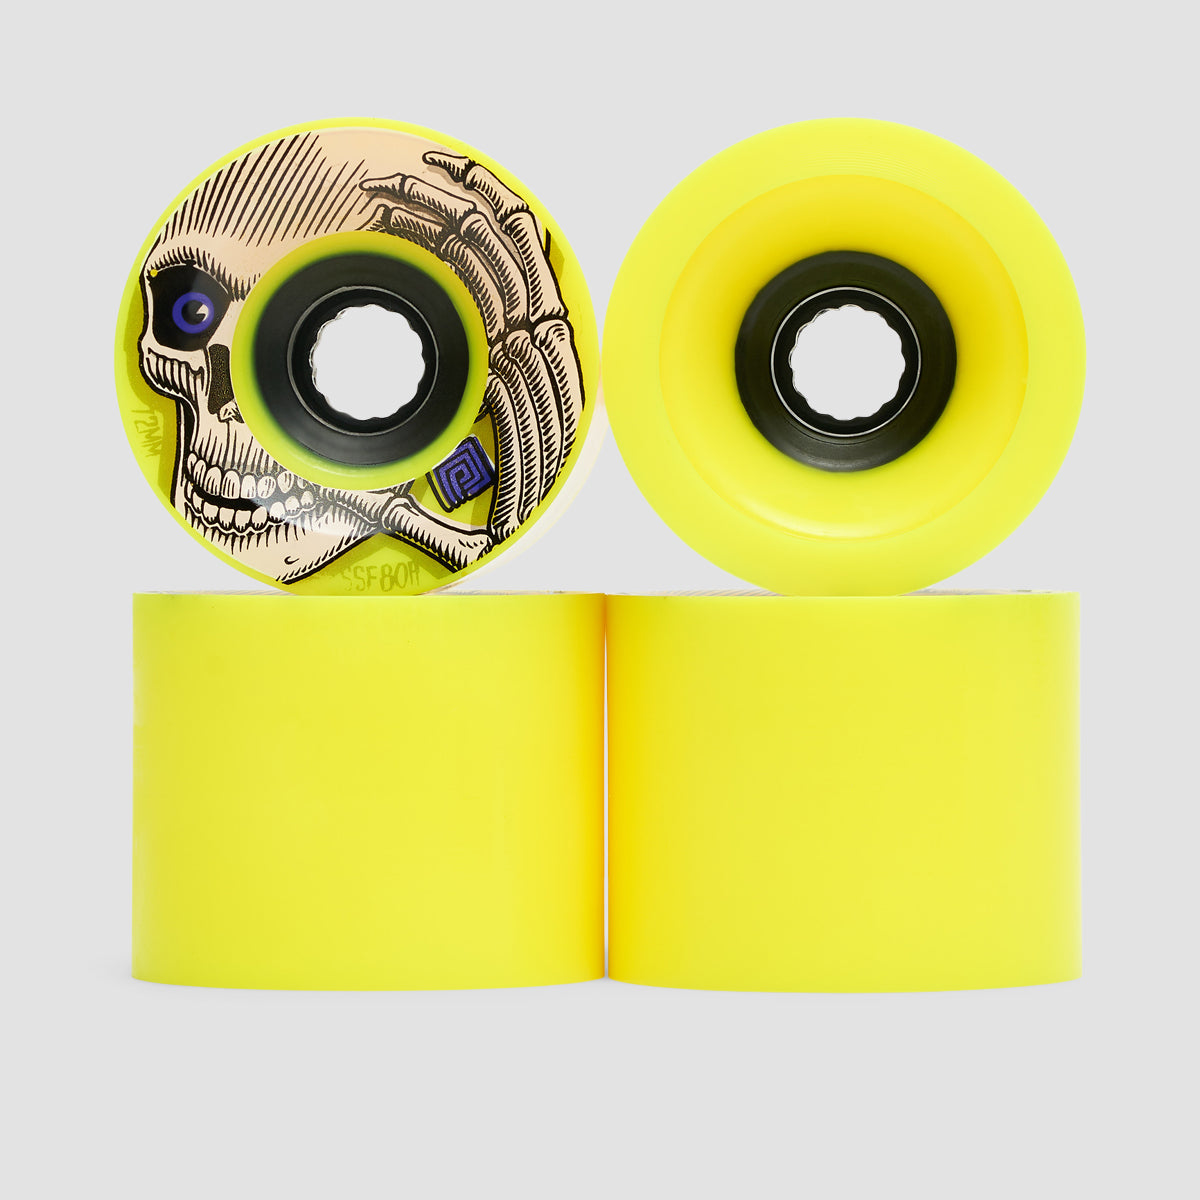 Powell Peralta Kevin Reimer 80A Soft Slide Skateboard Wheels Yellow/Black 72mm